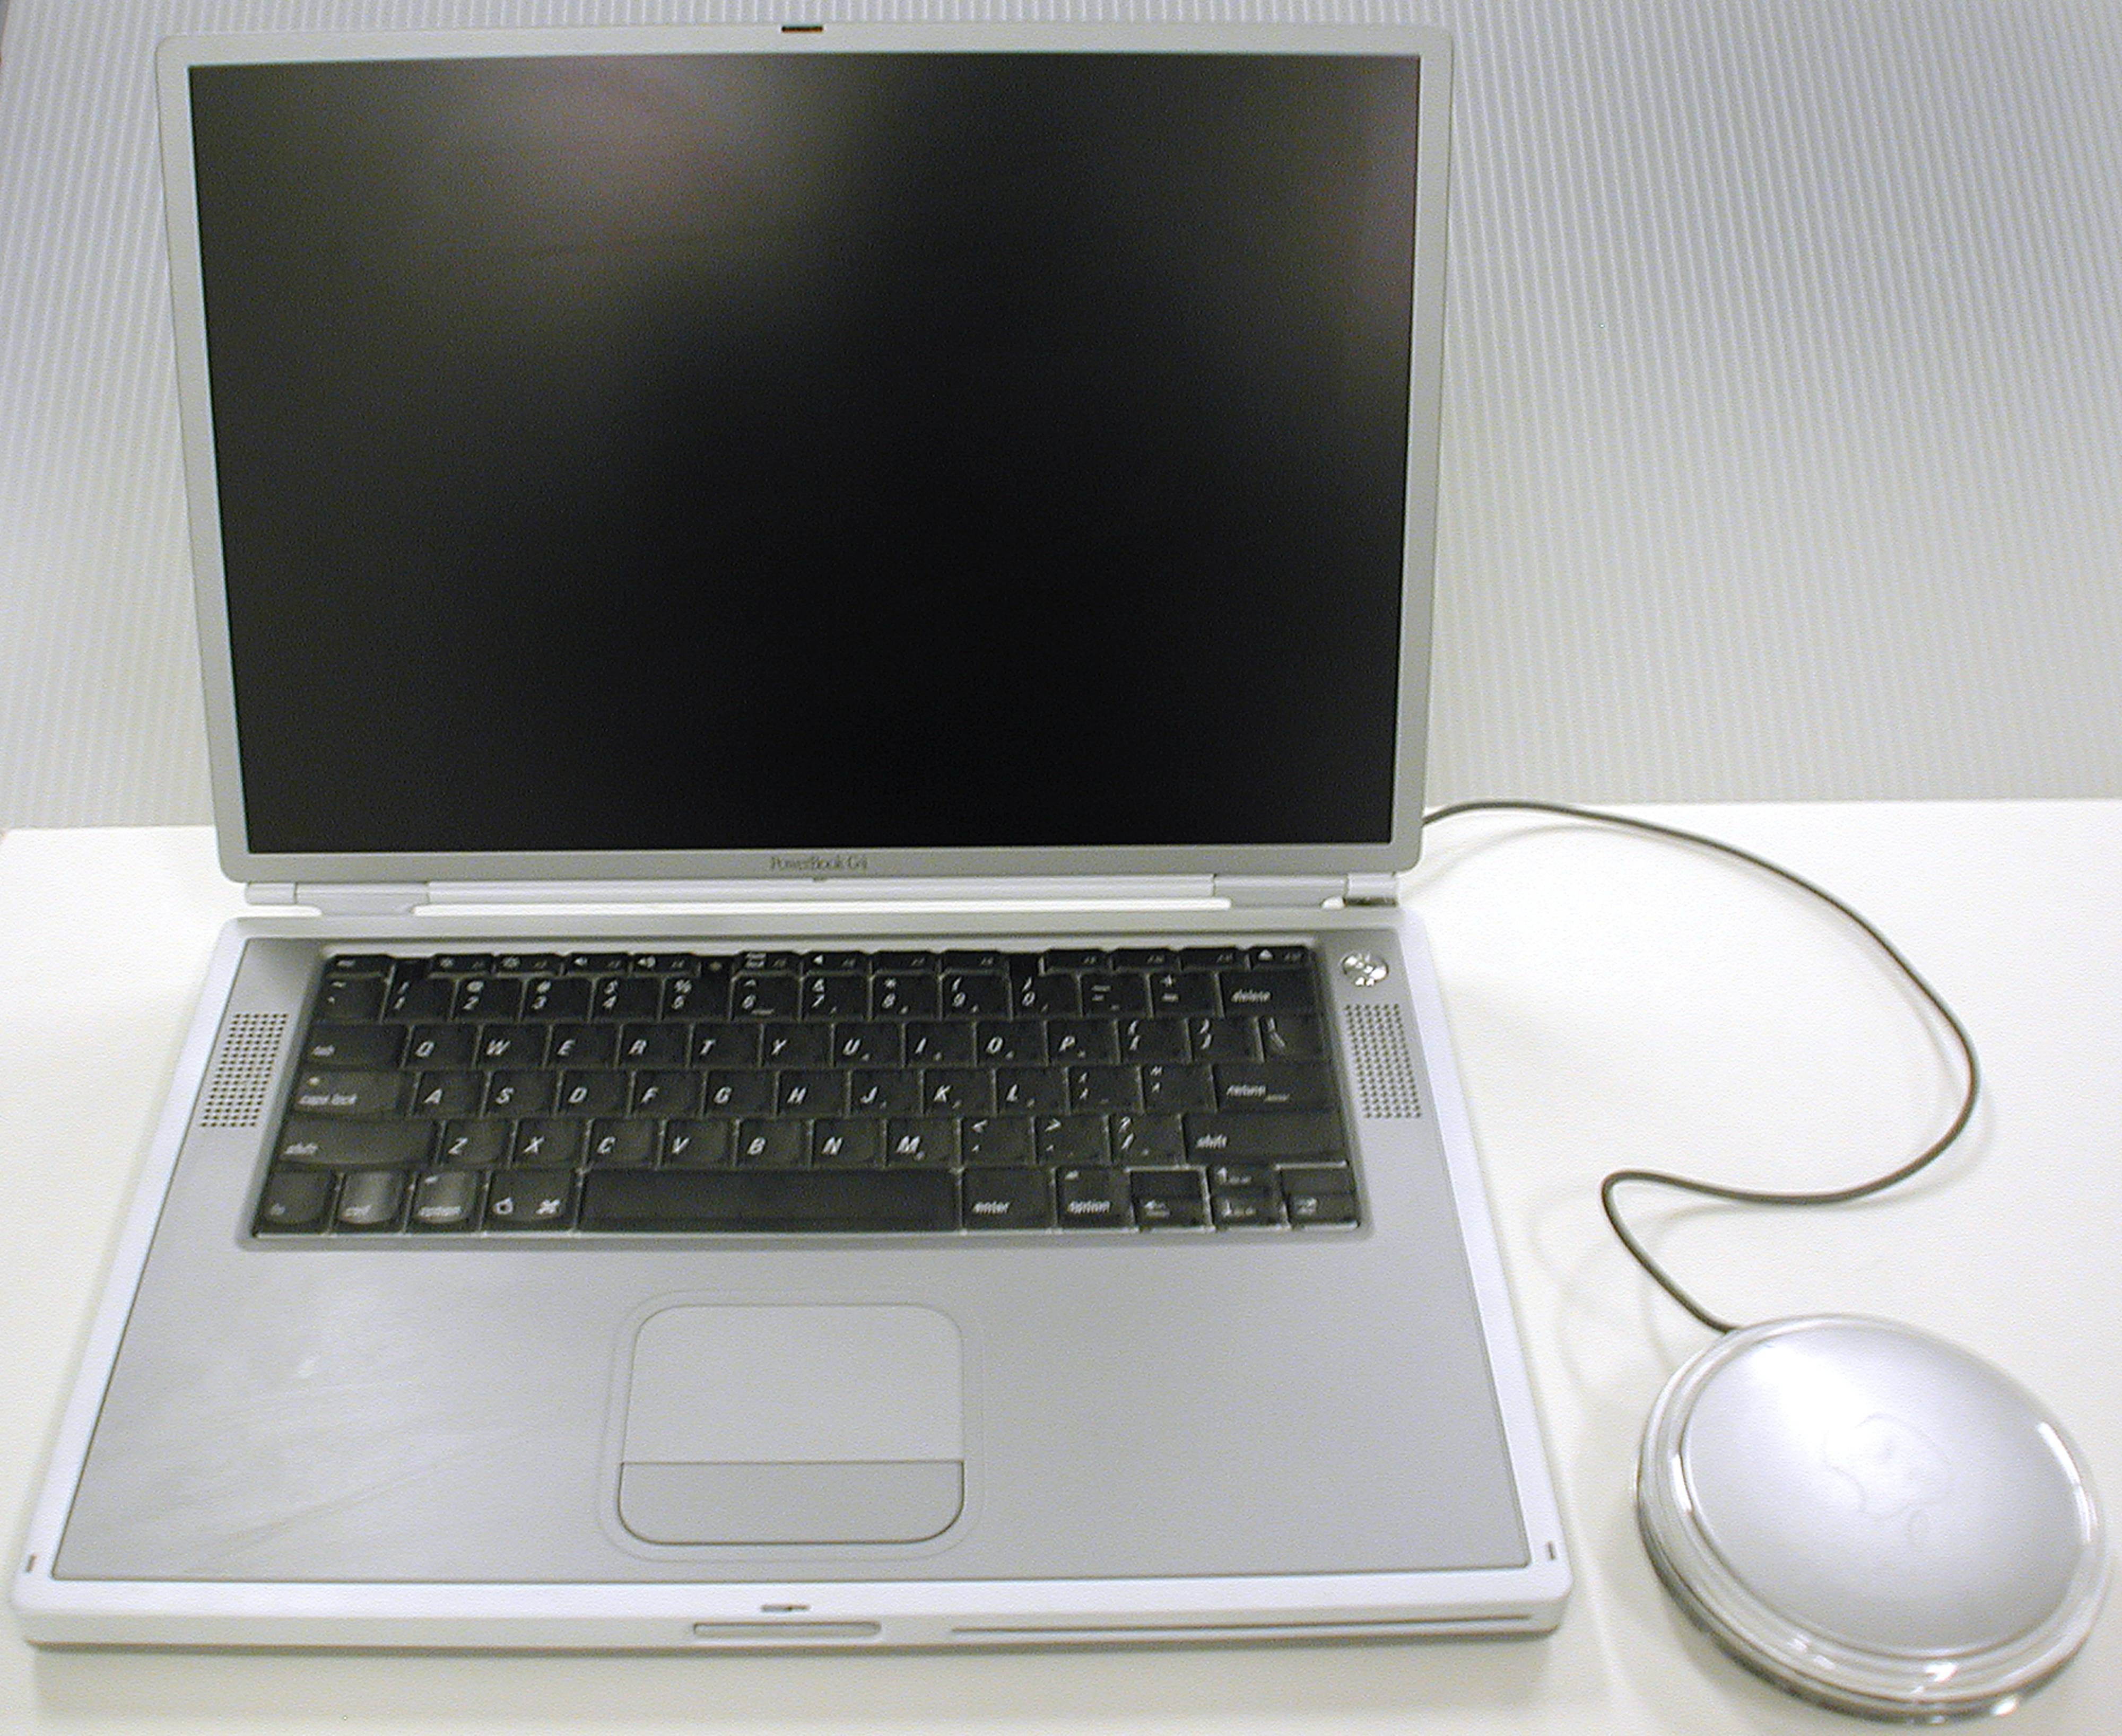 Picture of a Titanium PowerBook G4 laptop computer